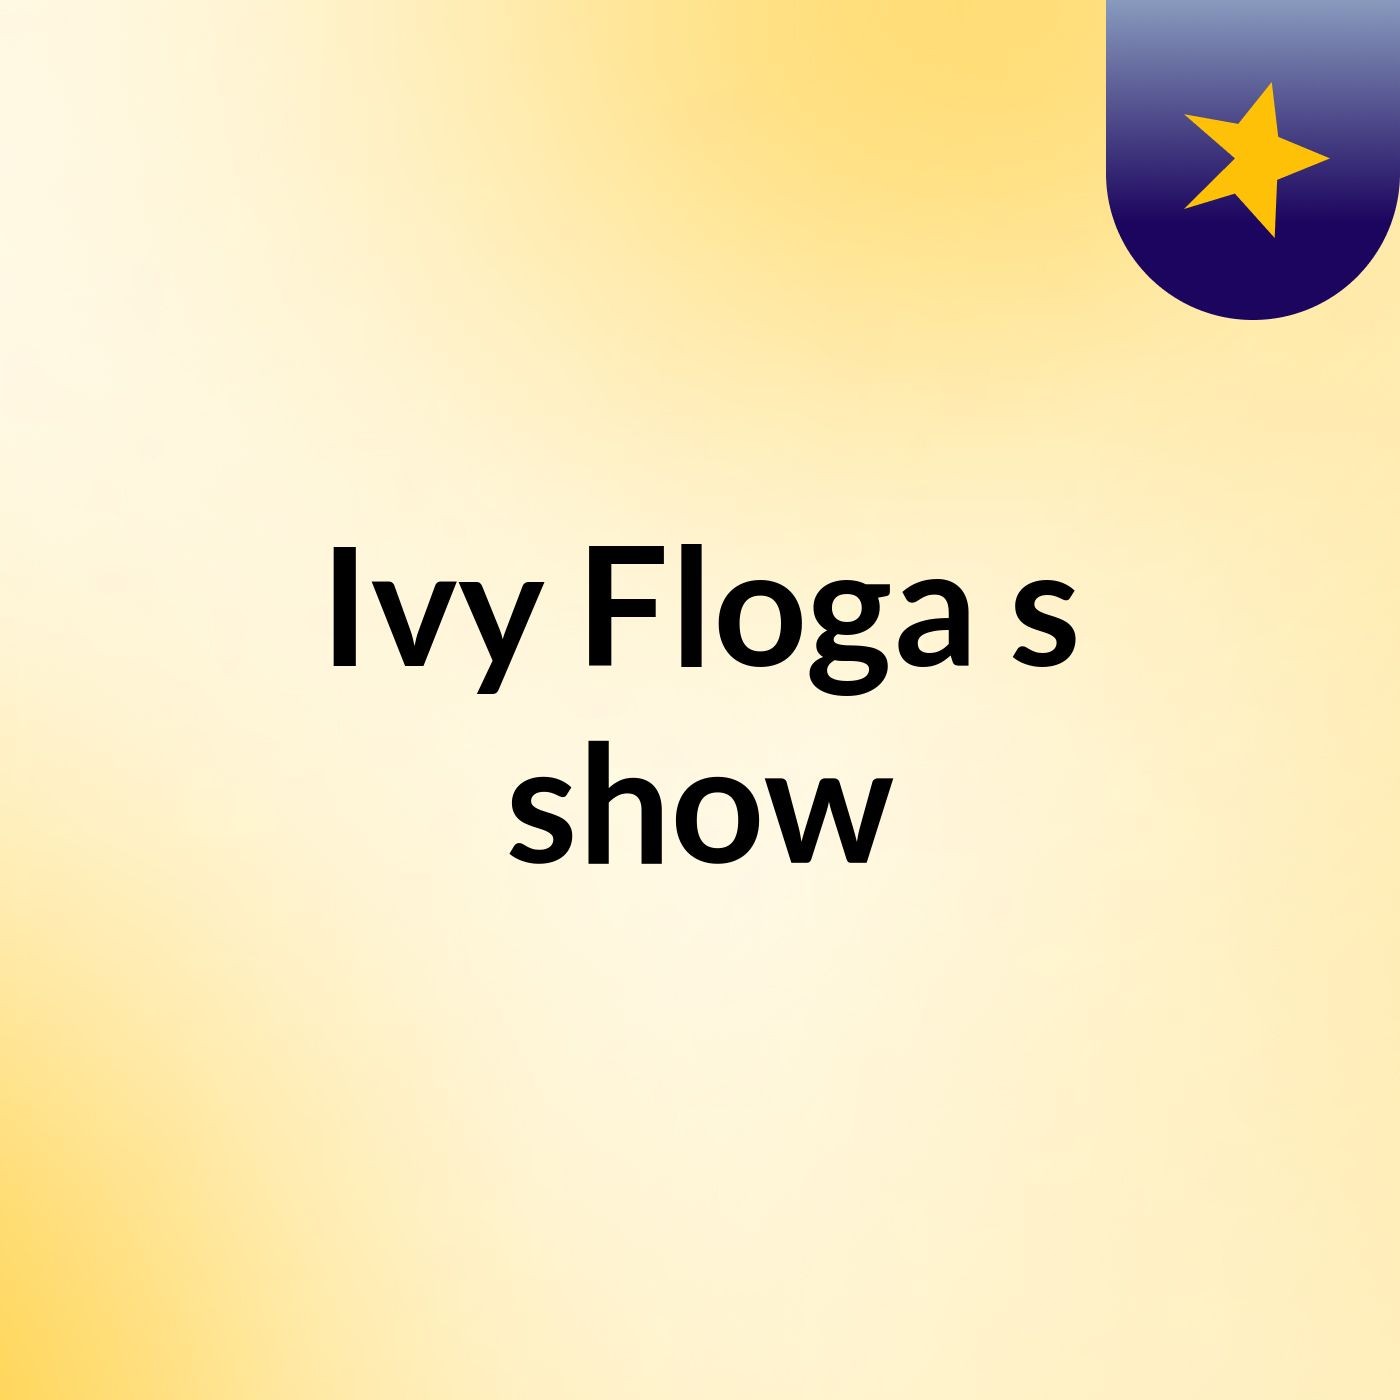 Episode 3 - Ivy Floga's show